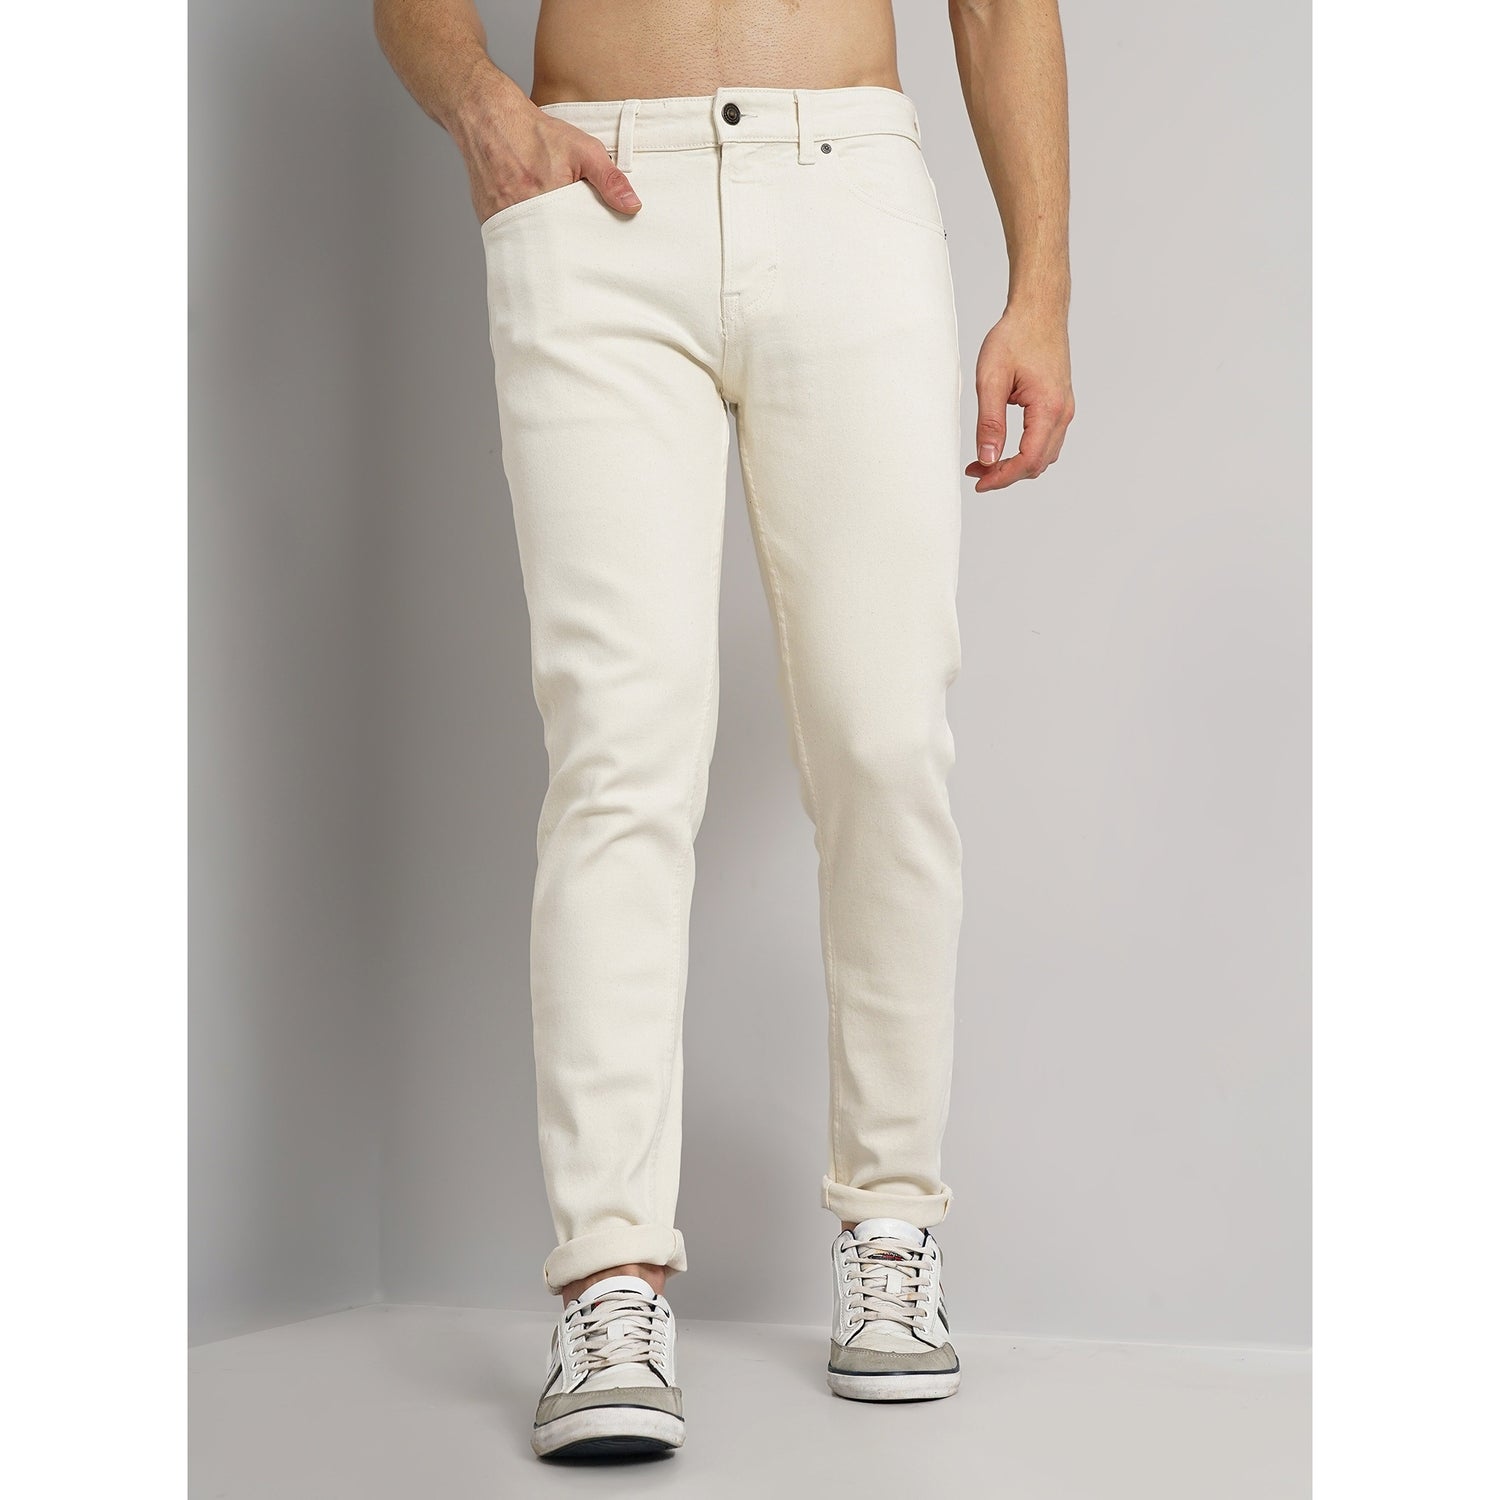 White Cotton-Blend Colored Denim Jeans